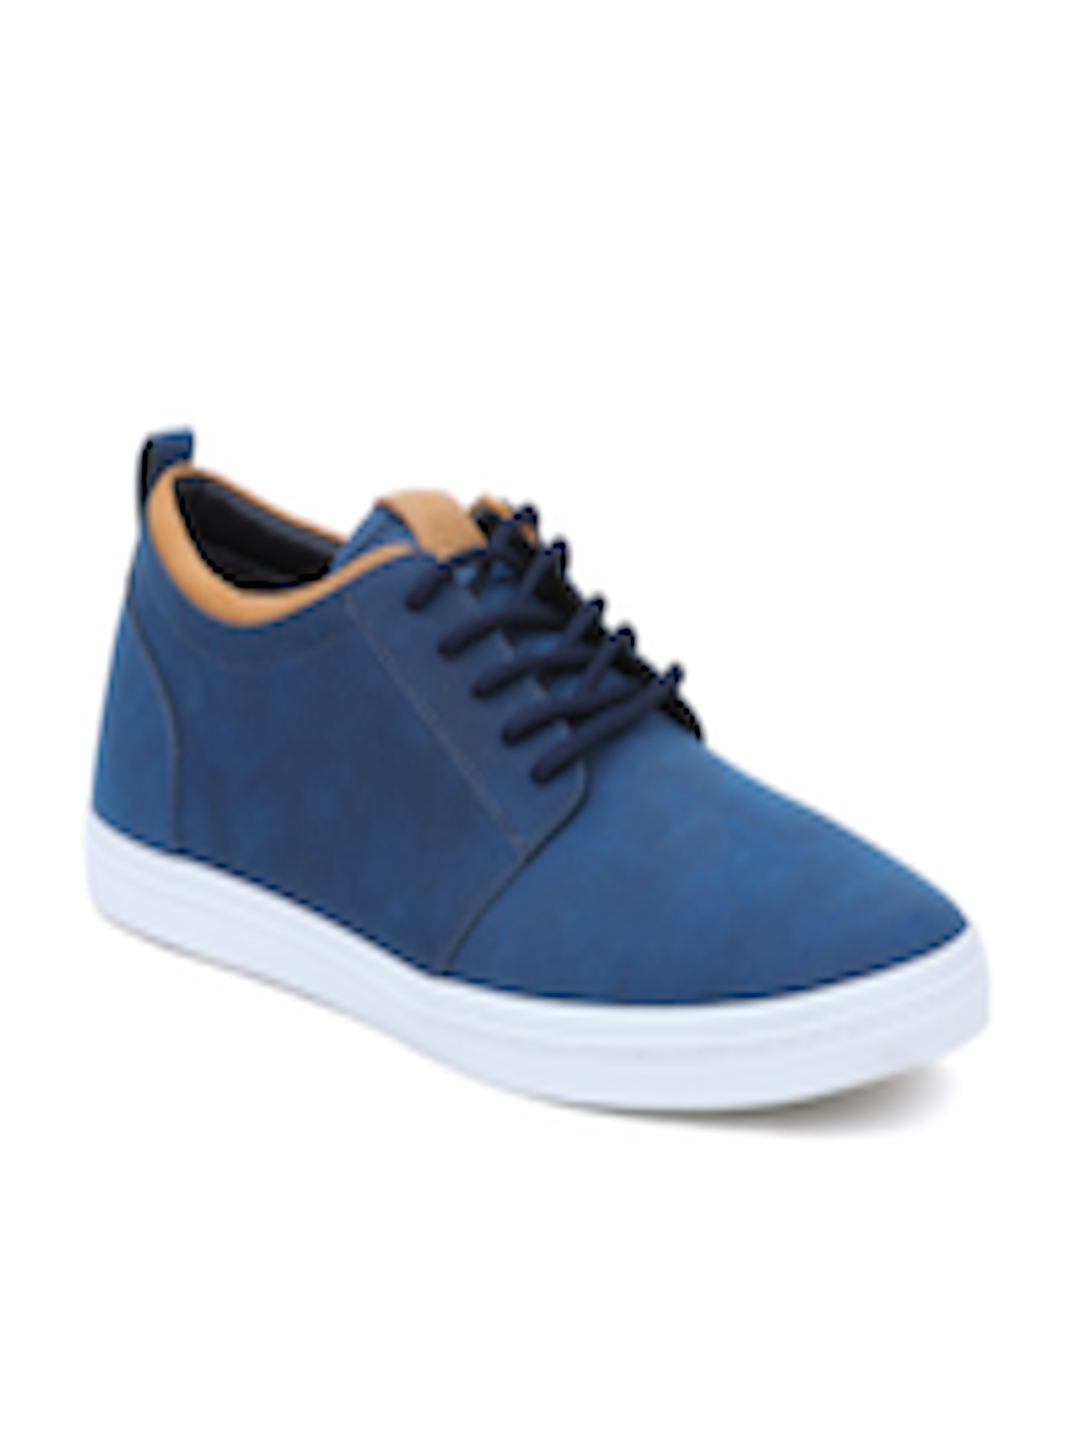 Buy ALDO Men Navy Blue Sneakers - Casual Shoes for Men 7763940 | Myntra